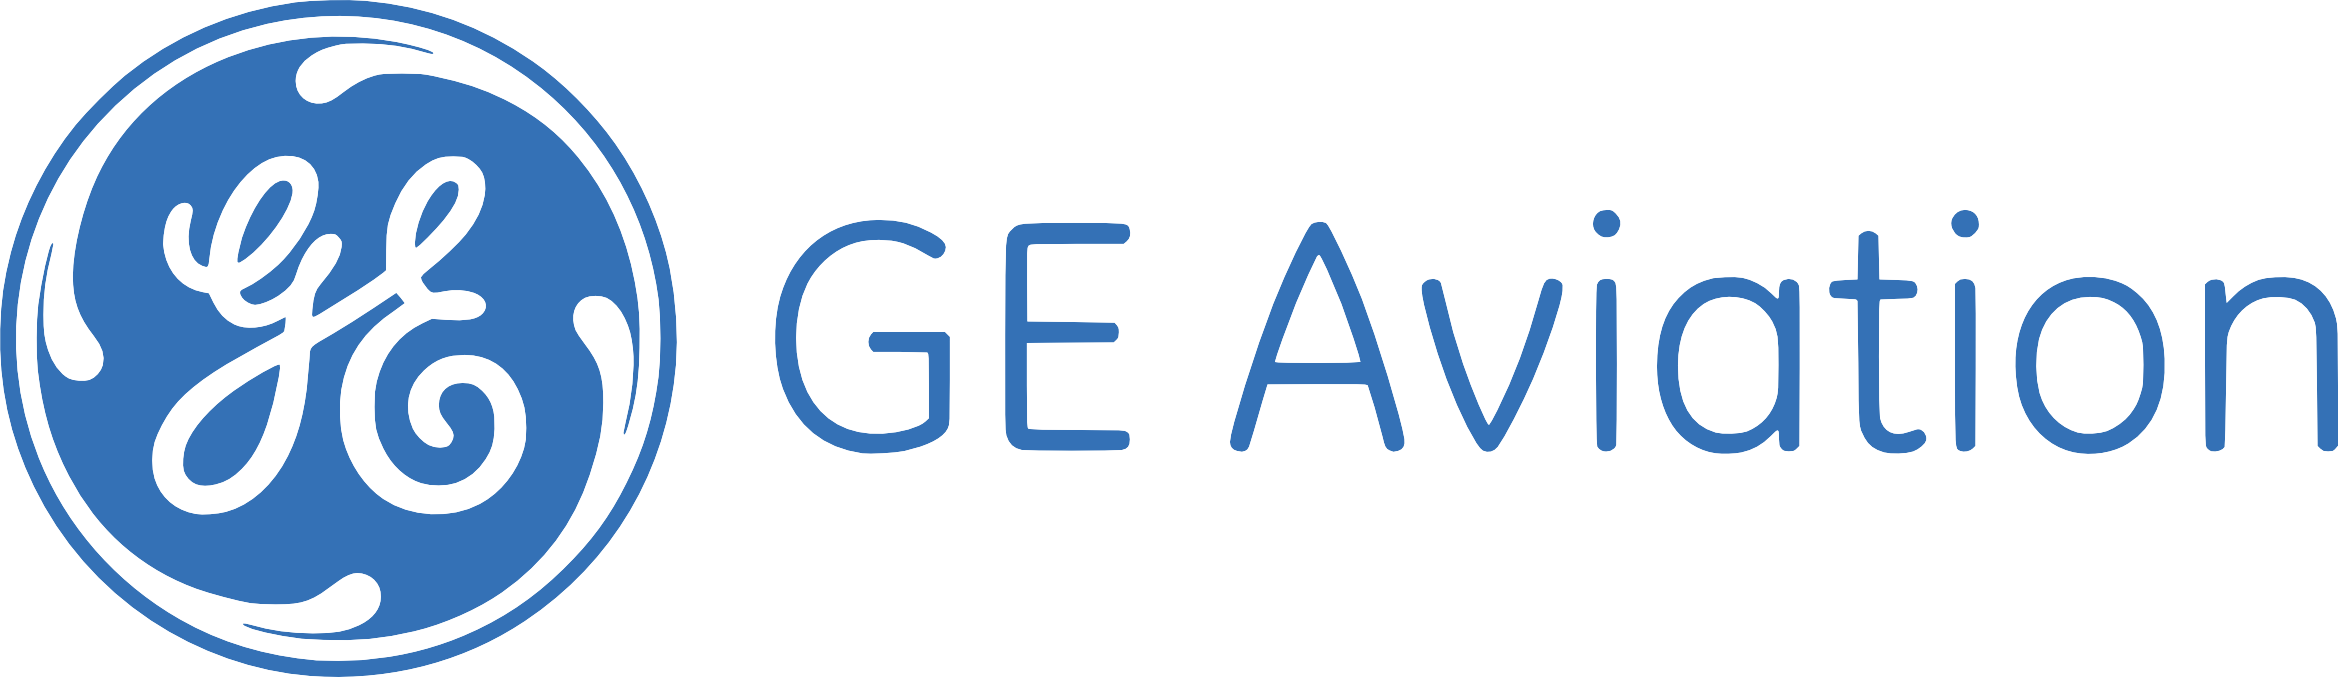 GE aviation hires 91直播engineers